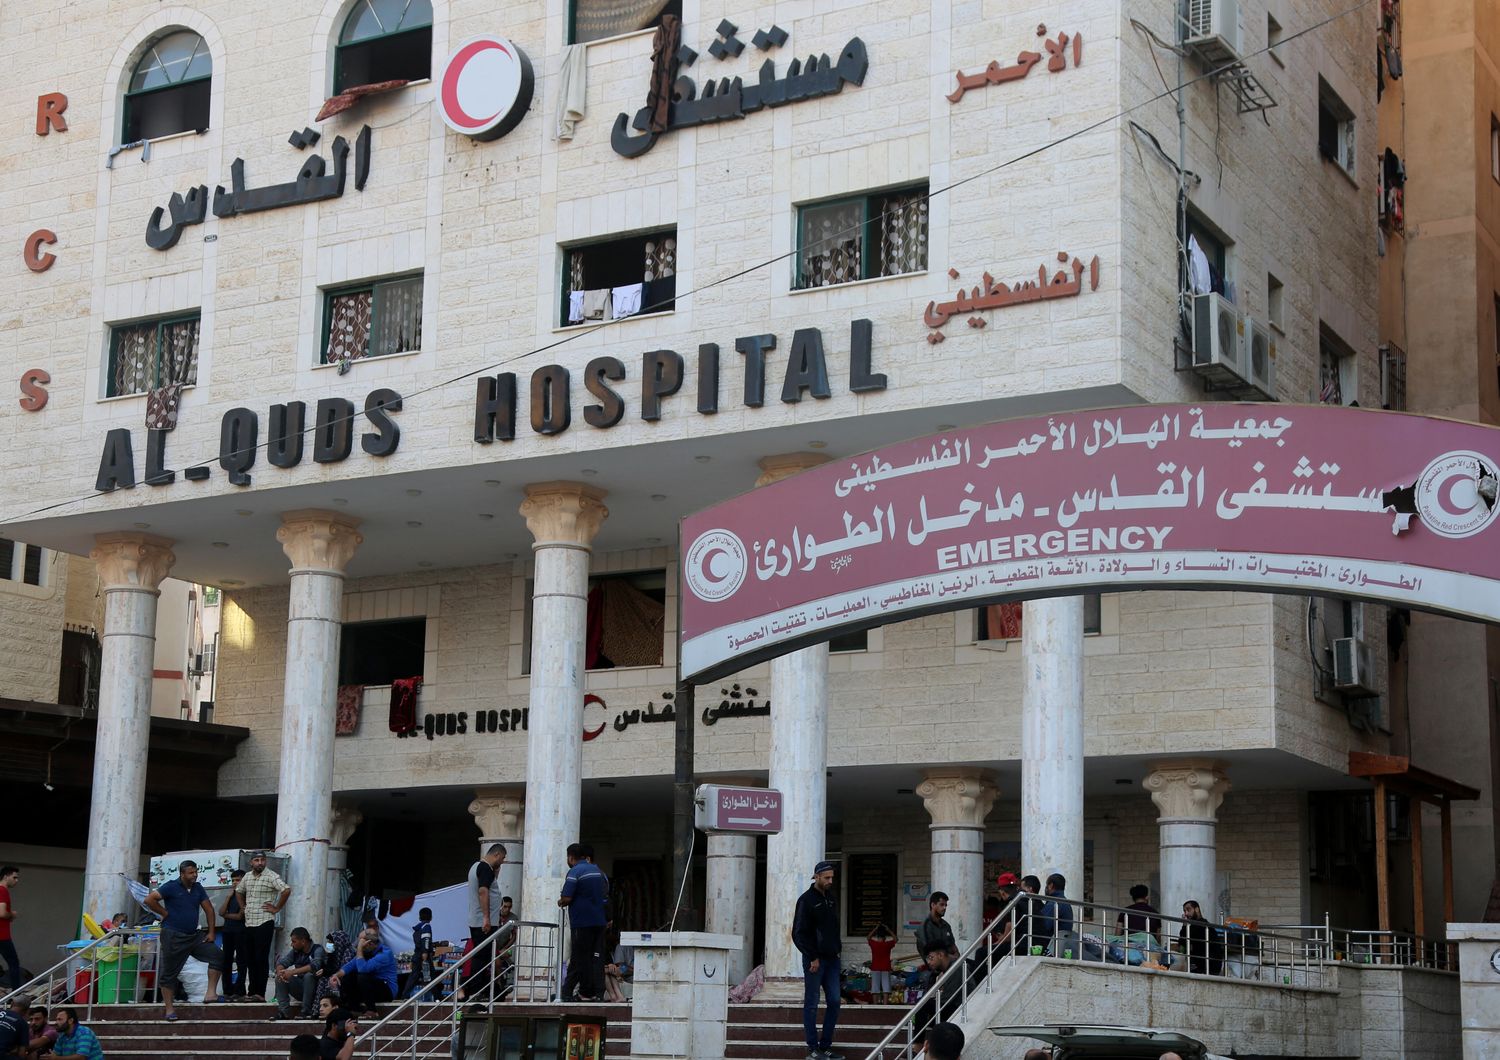 L'Ospedale di&nbsp;Gaza City Al-Quds Hospital